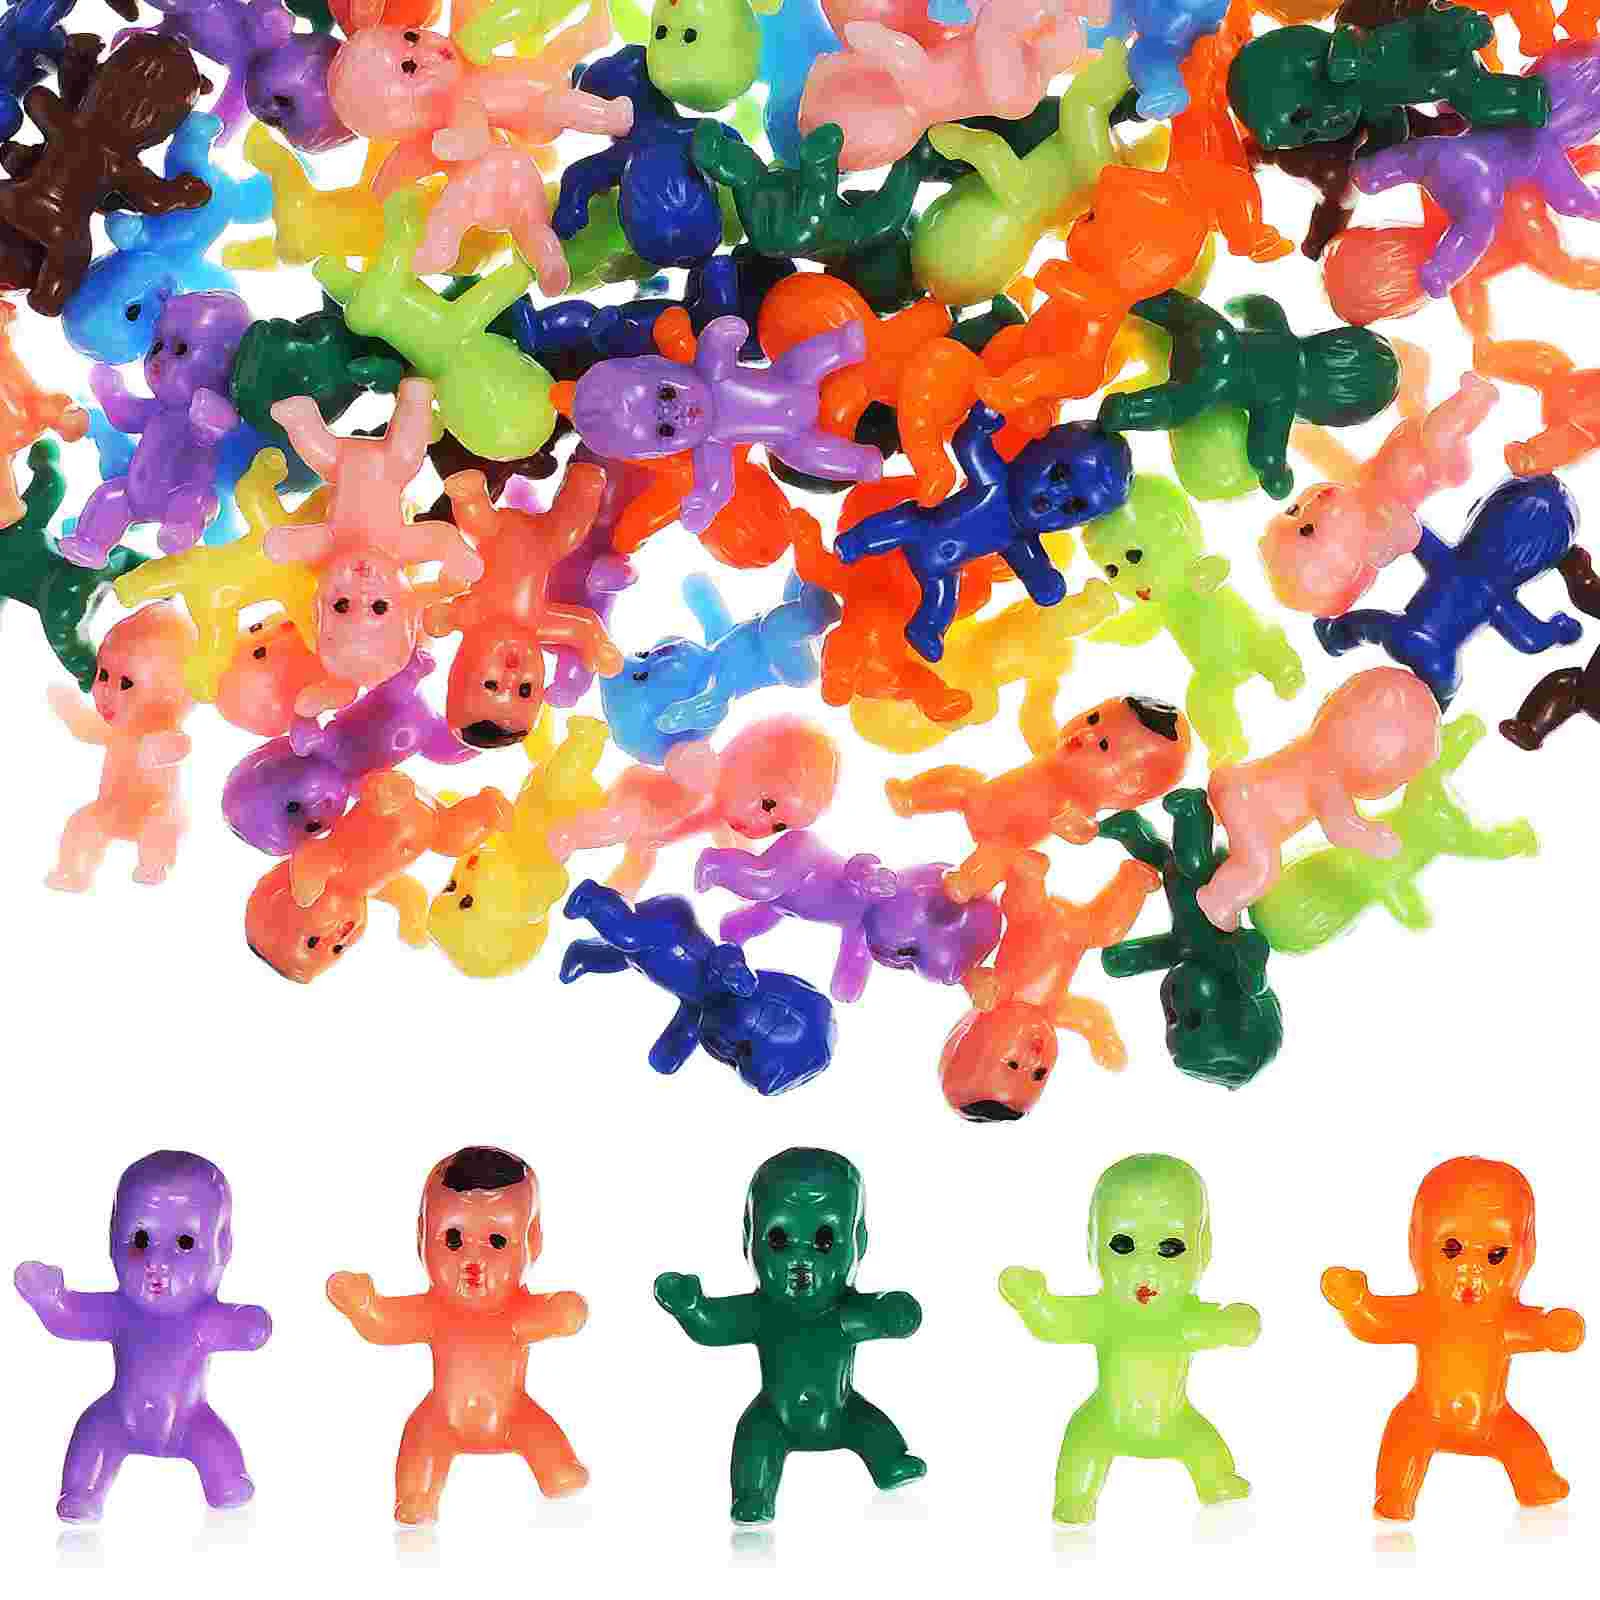 

100 Pcs Little Plastic Baby Statues Cupcake Decor Babies Dolls Cap Topper Tiny Figurines Festival Supplies